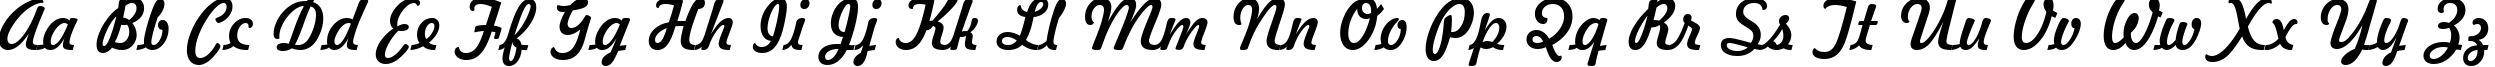 Пример написания английского алфавита шрифтом Freehand 521 BT